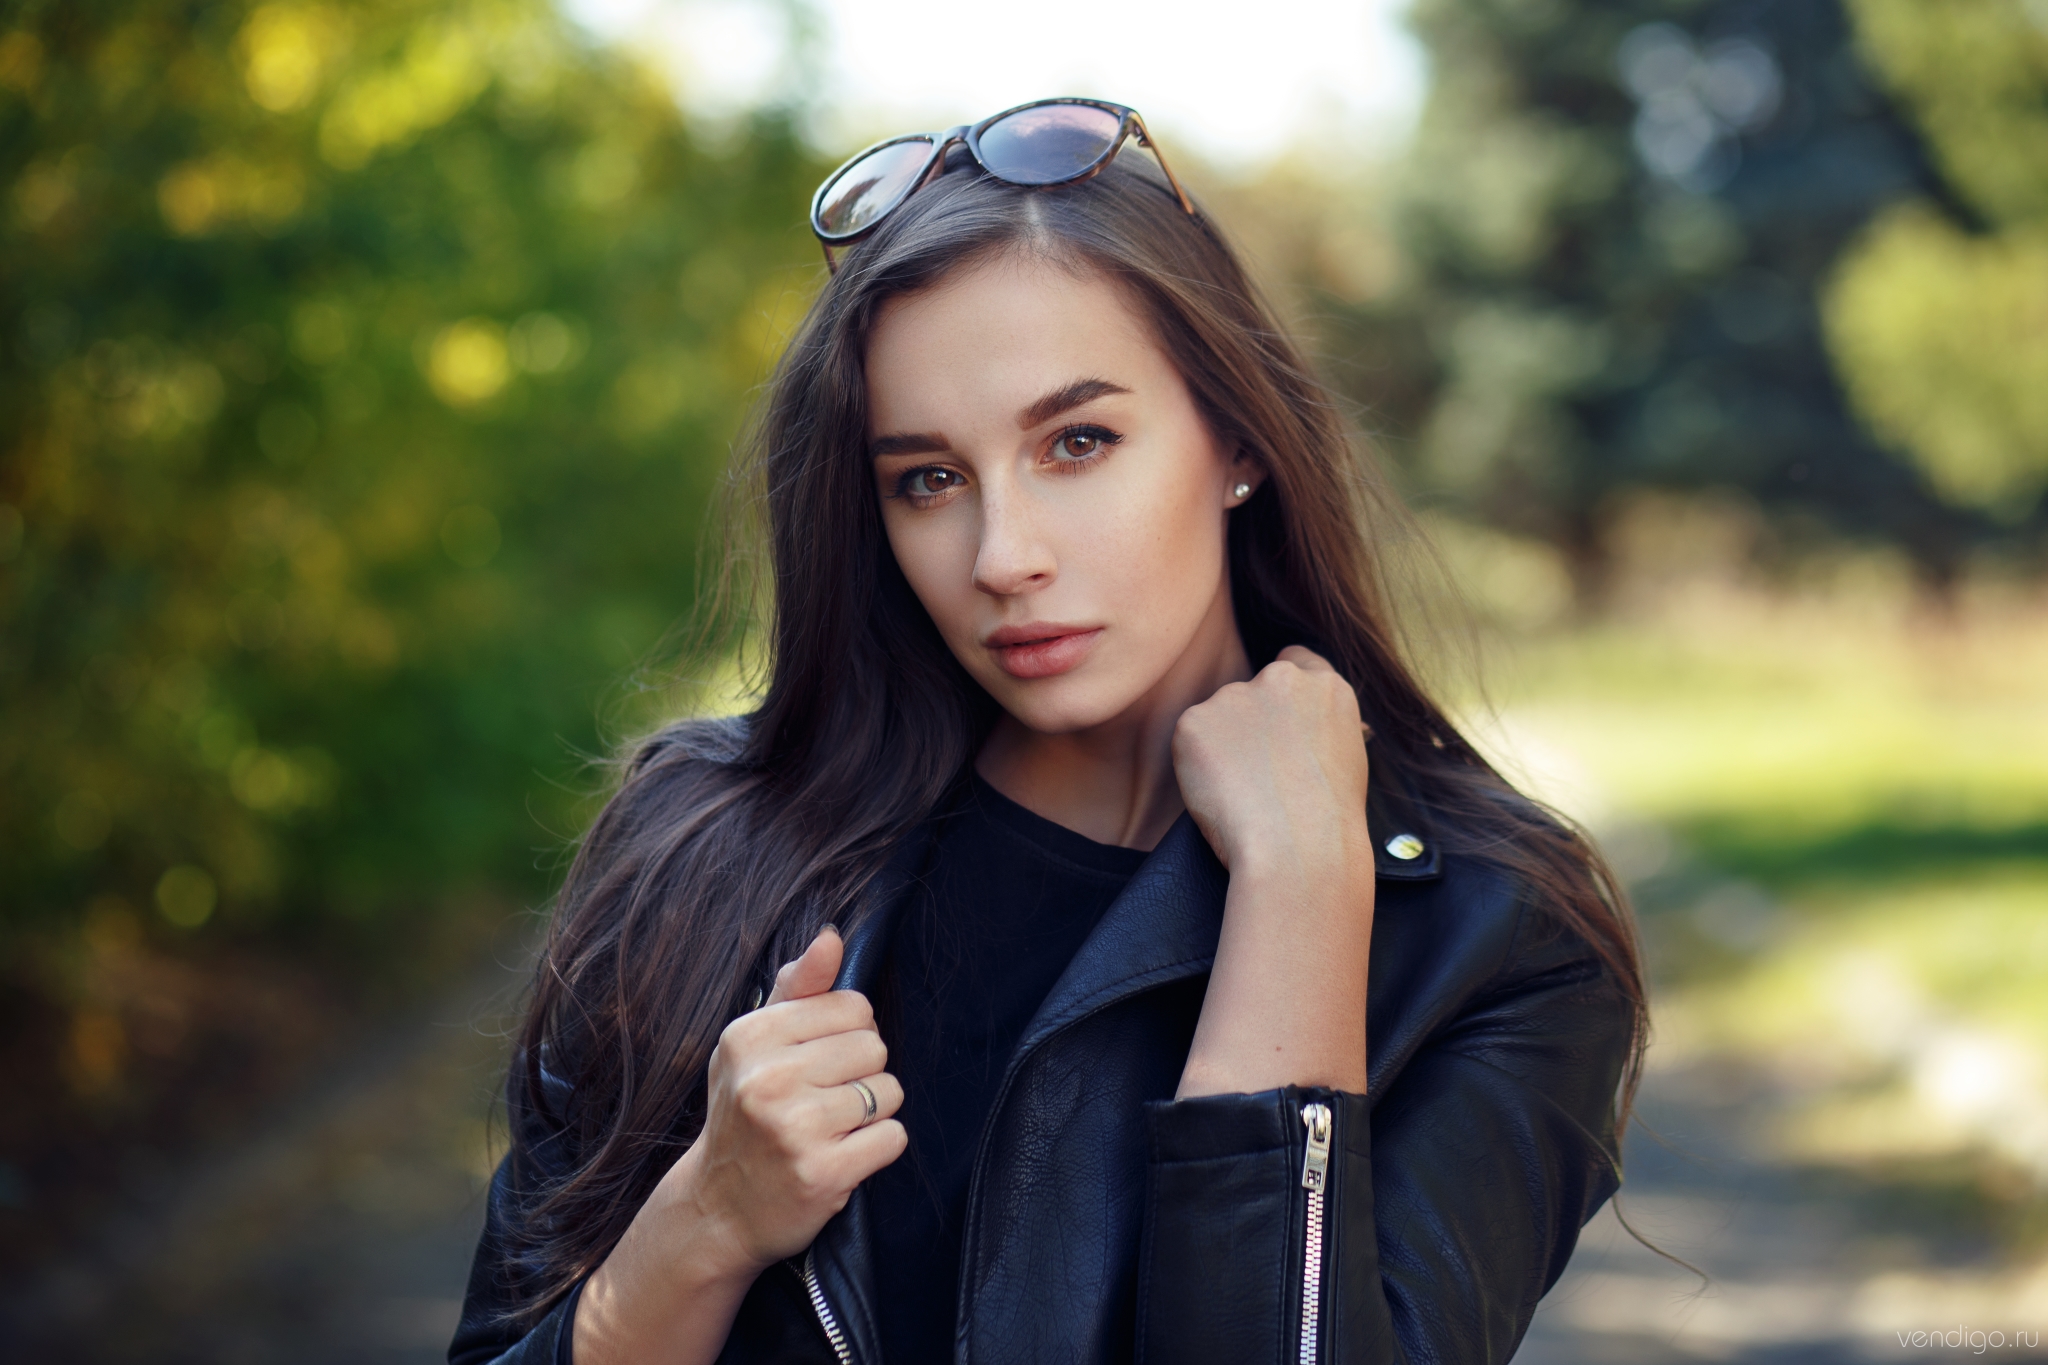 Evgeniy Bulatov Women Model Brunette Long Hair Portrait Outdoors Looking At Viewer Brown Eyes Earrin 2048x1365